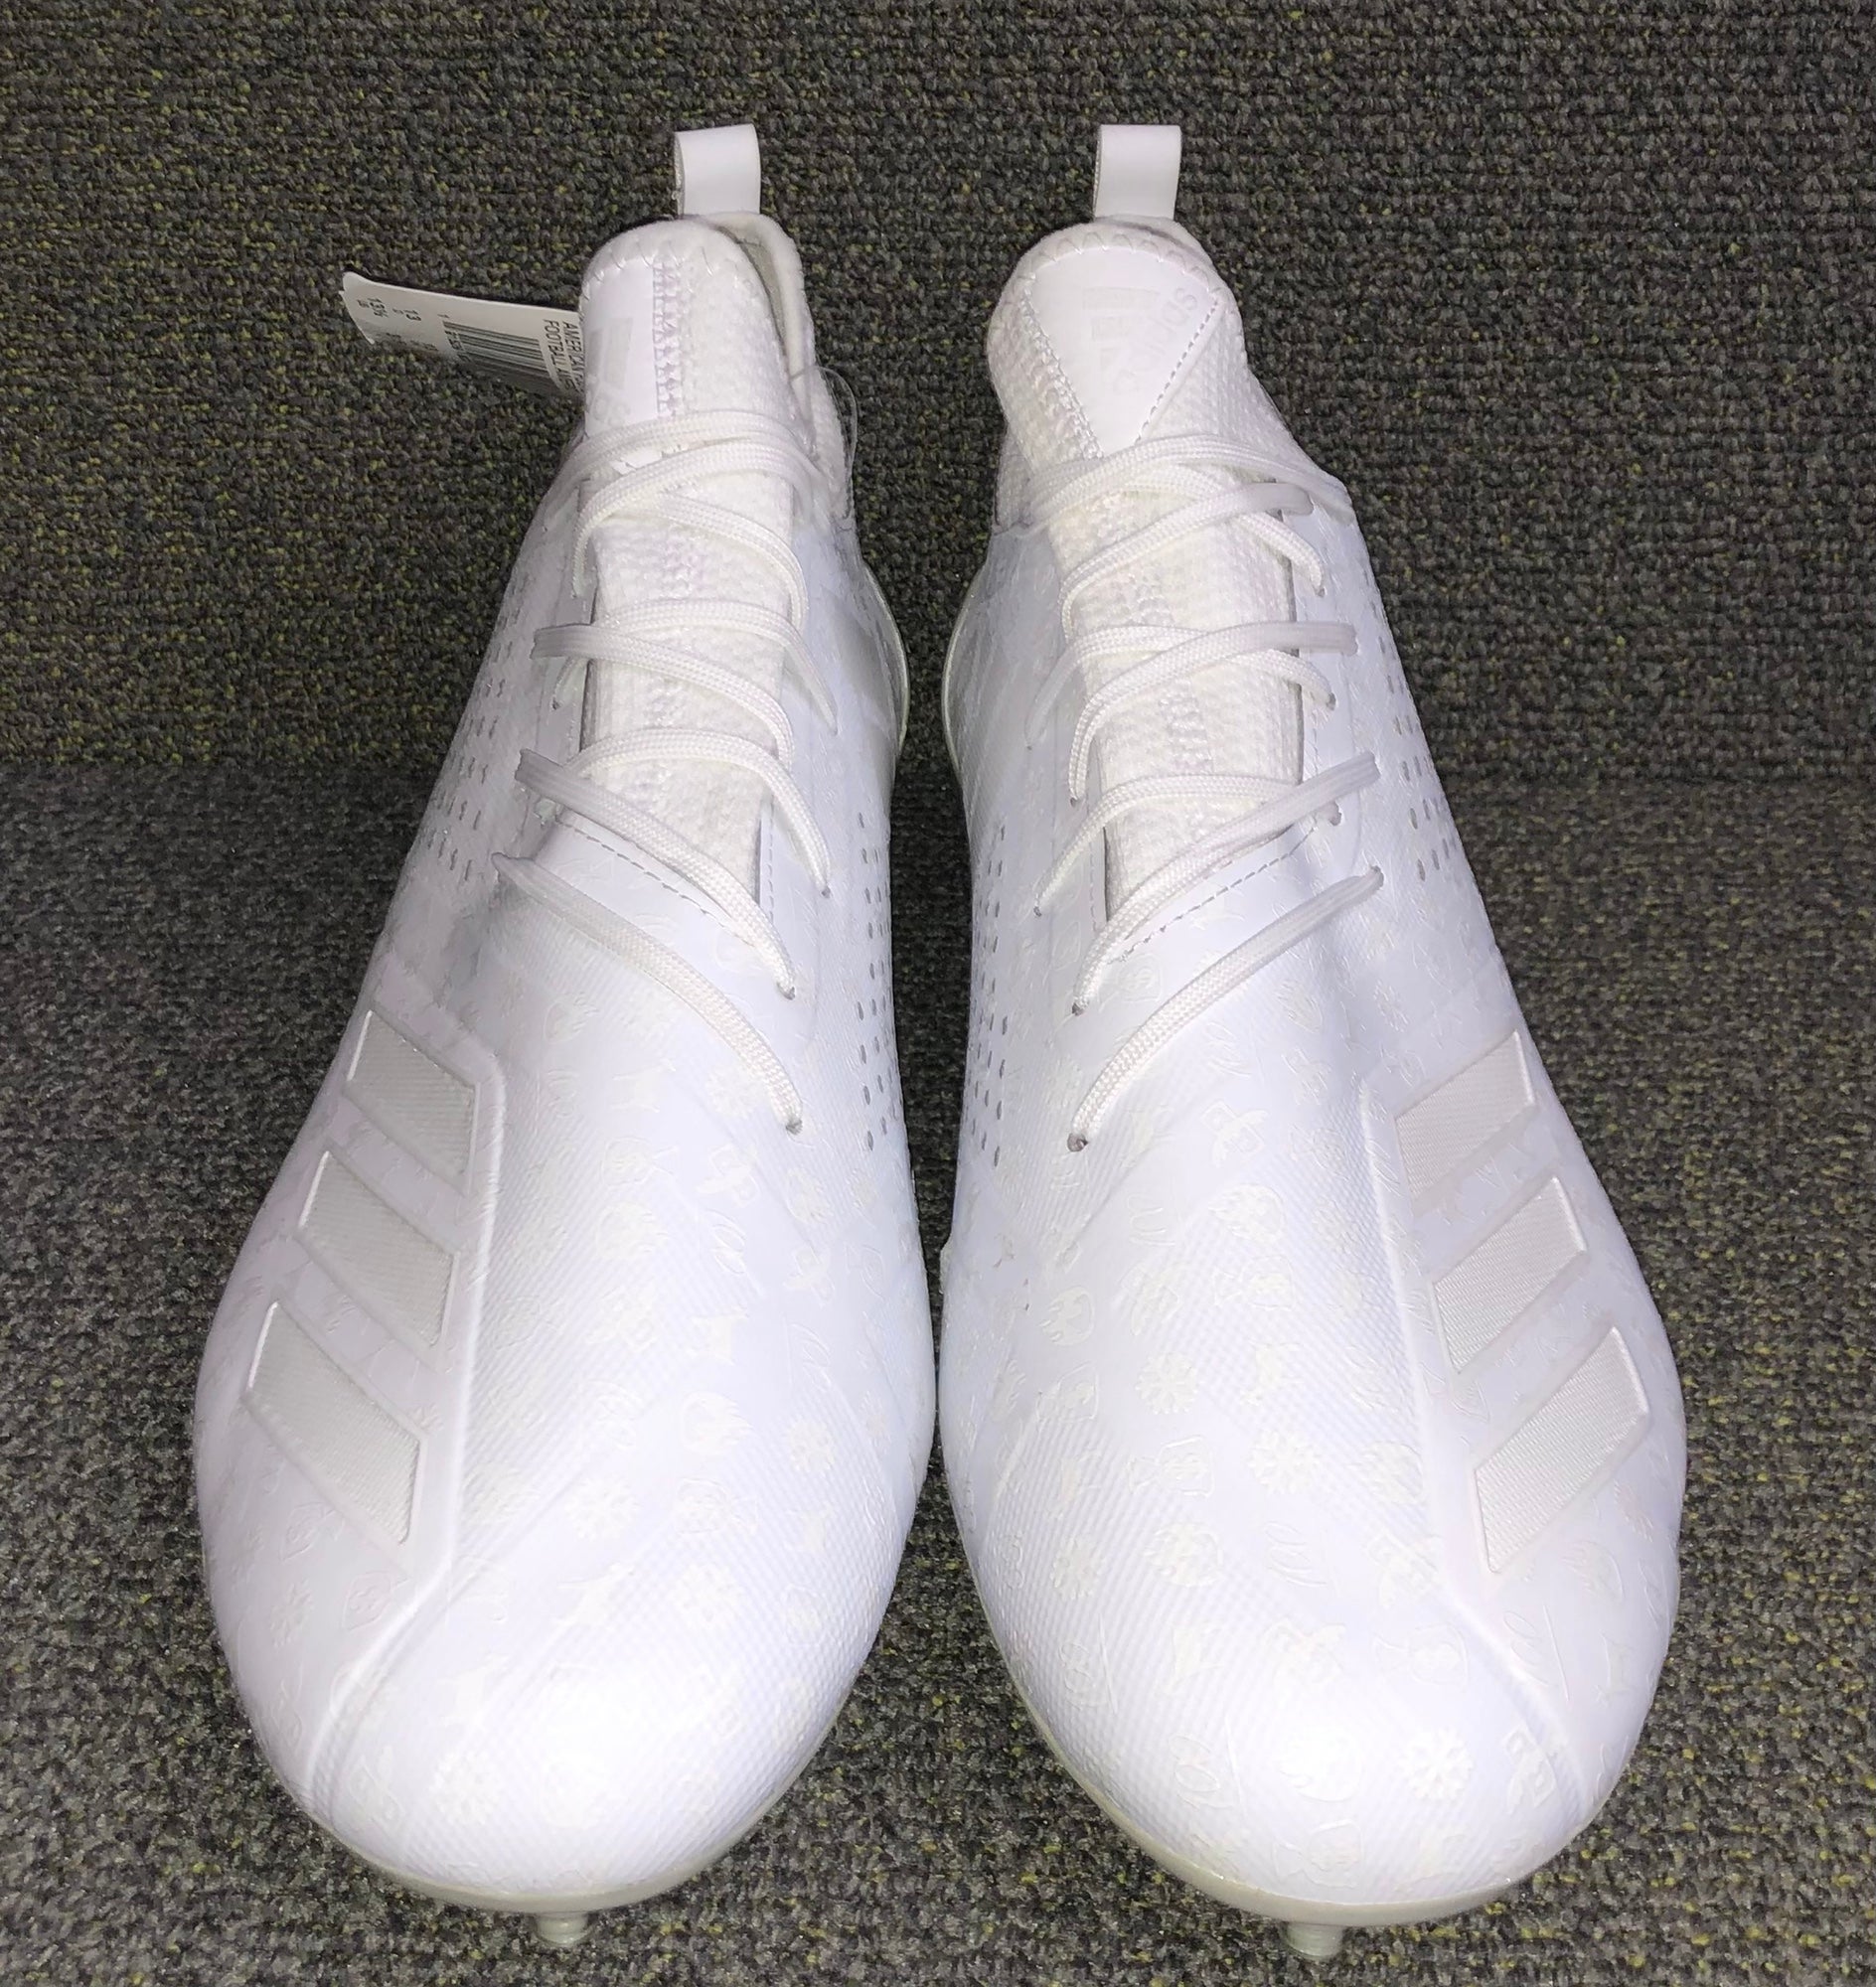 Adidas Adizero 5-Star 7.0 Football Cleats White CG6324 Mens size